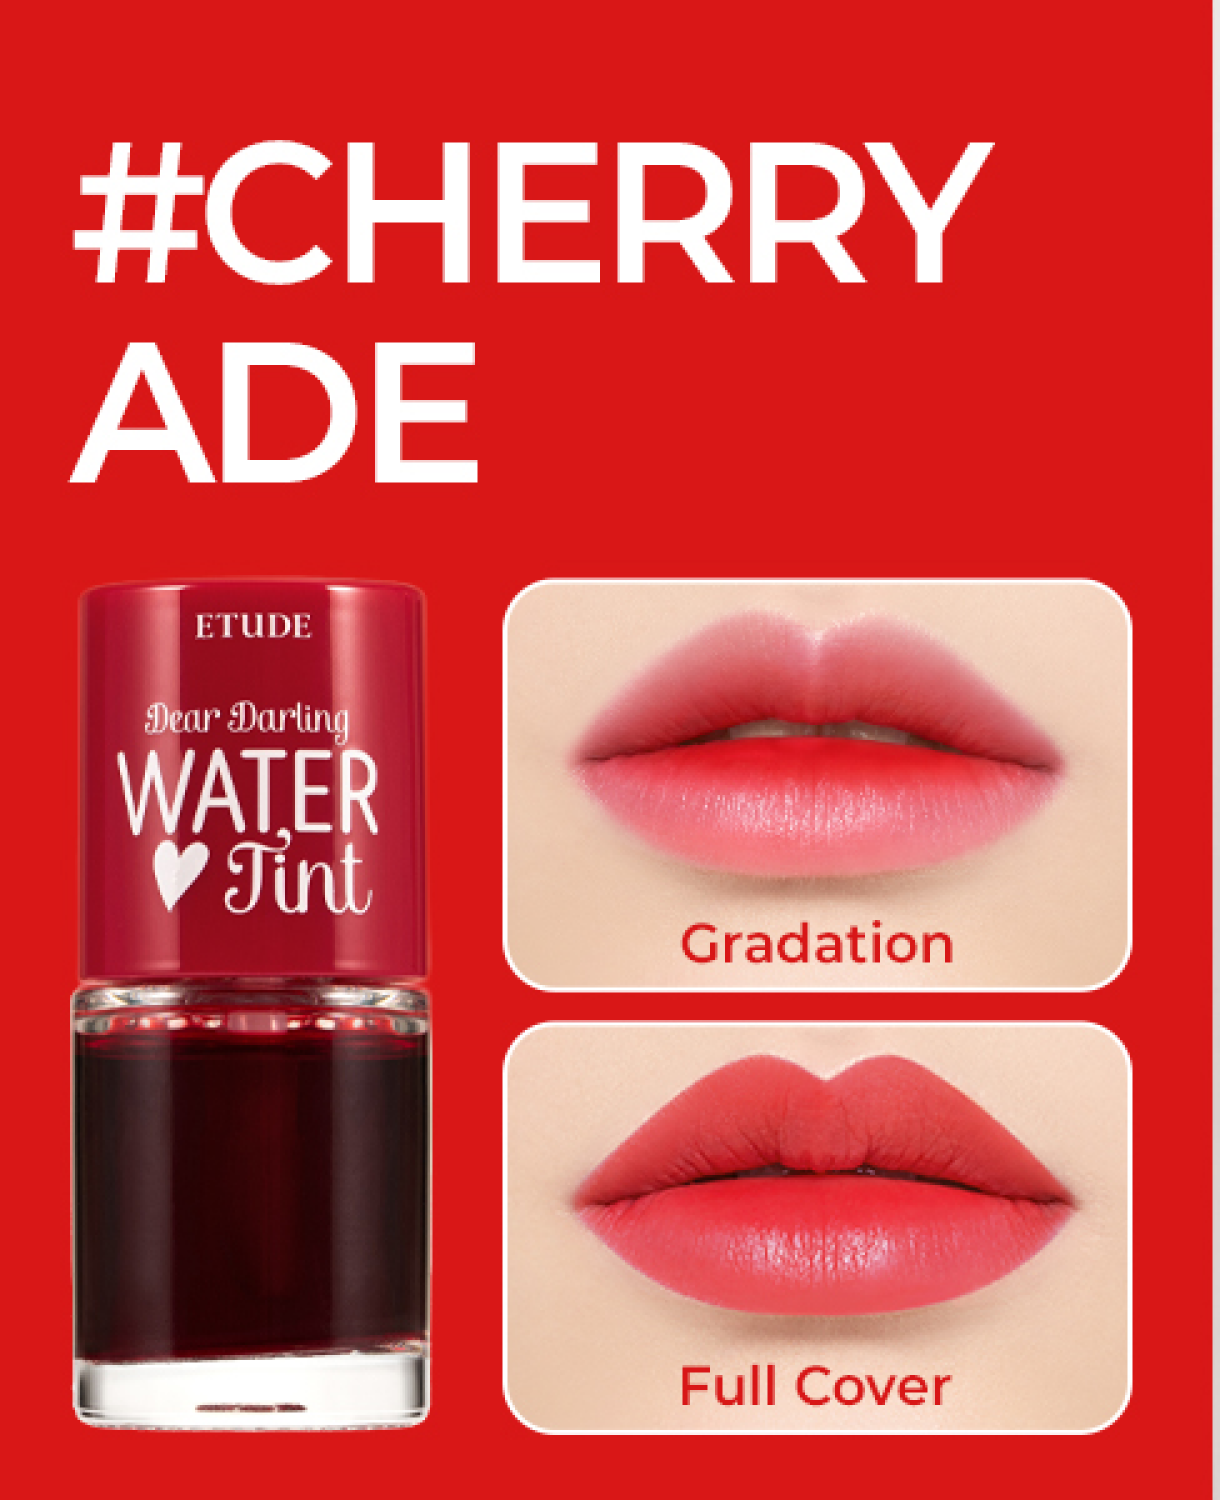 Dear darling water tint- Cherry-ade